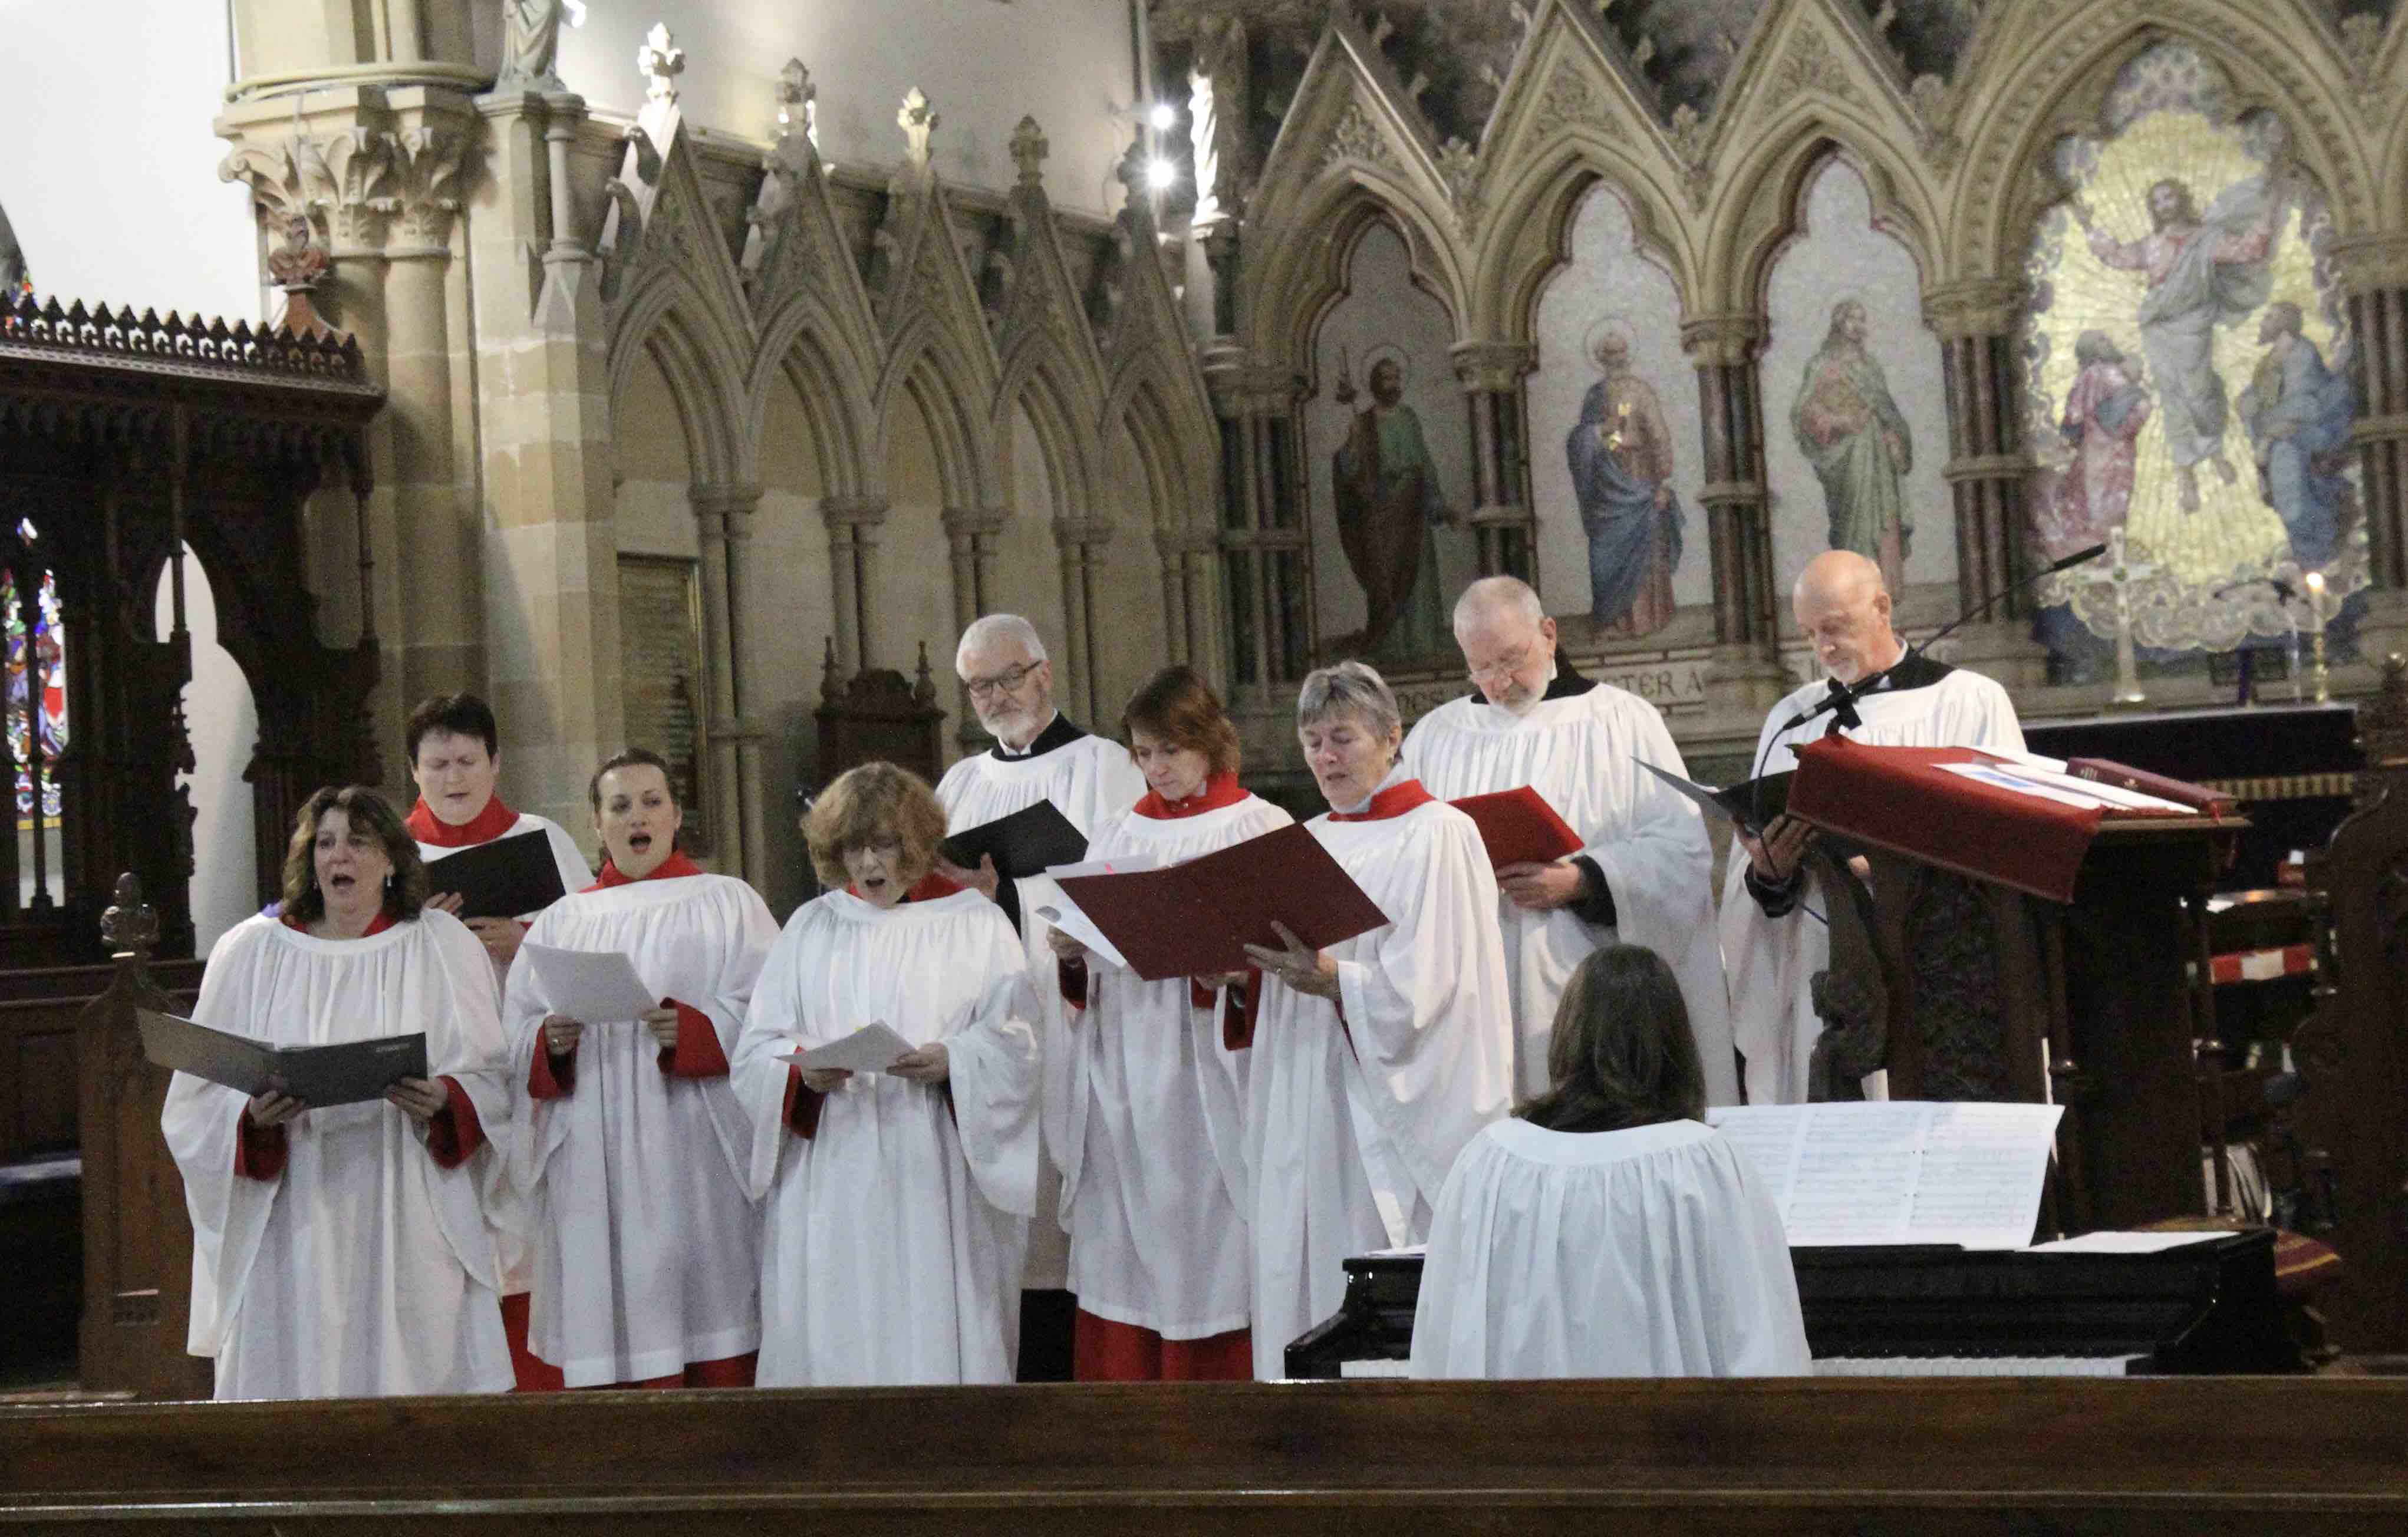 The choir singing the anthem.